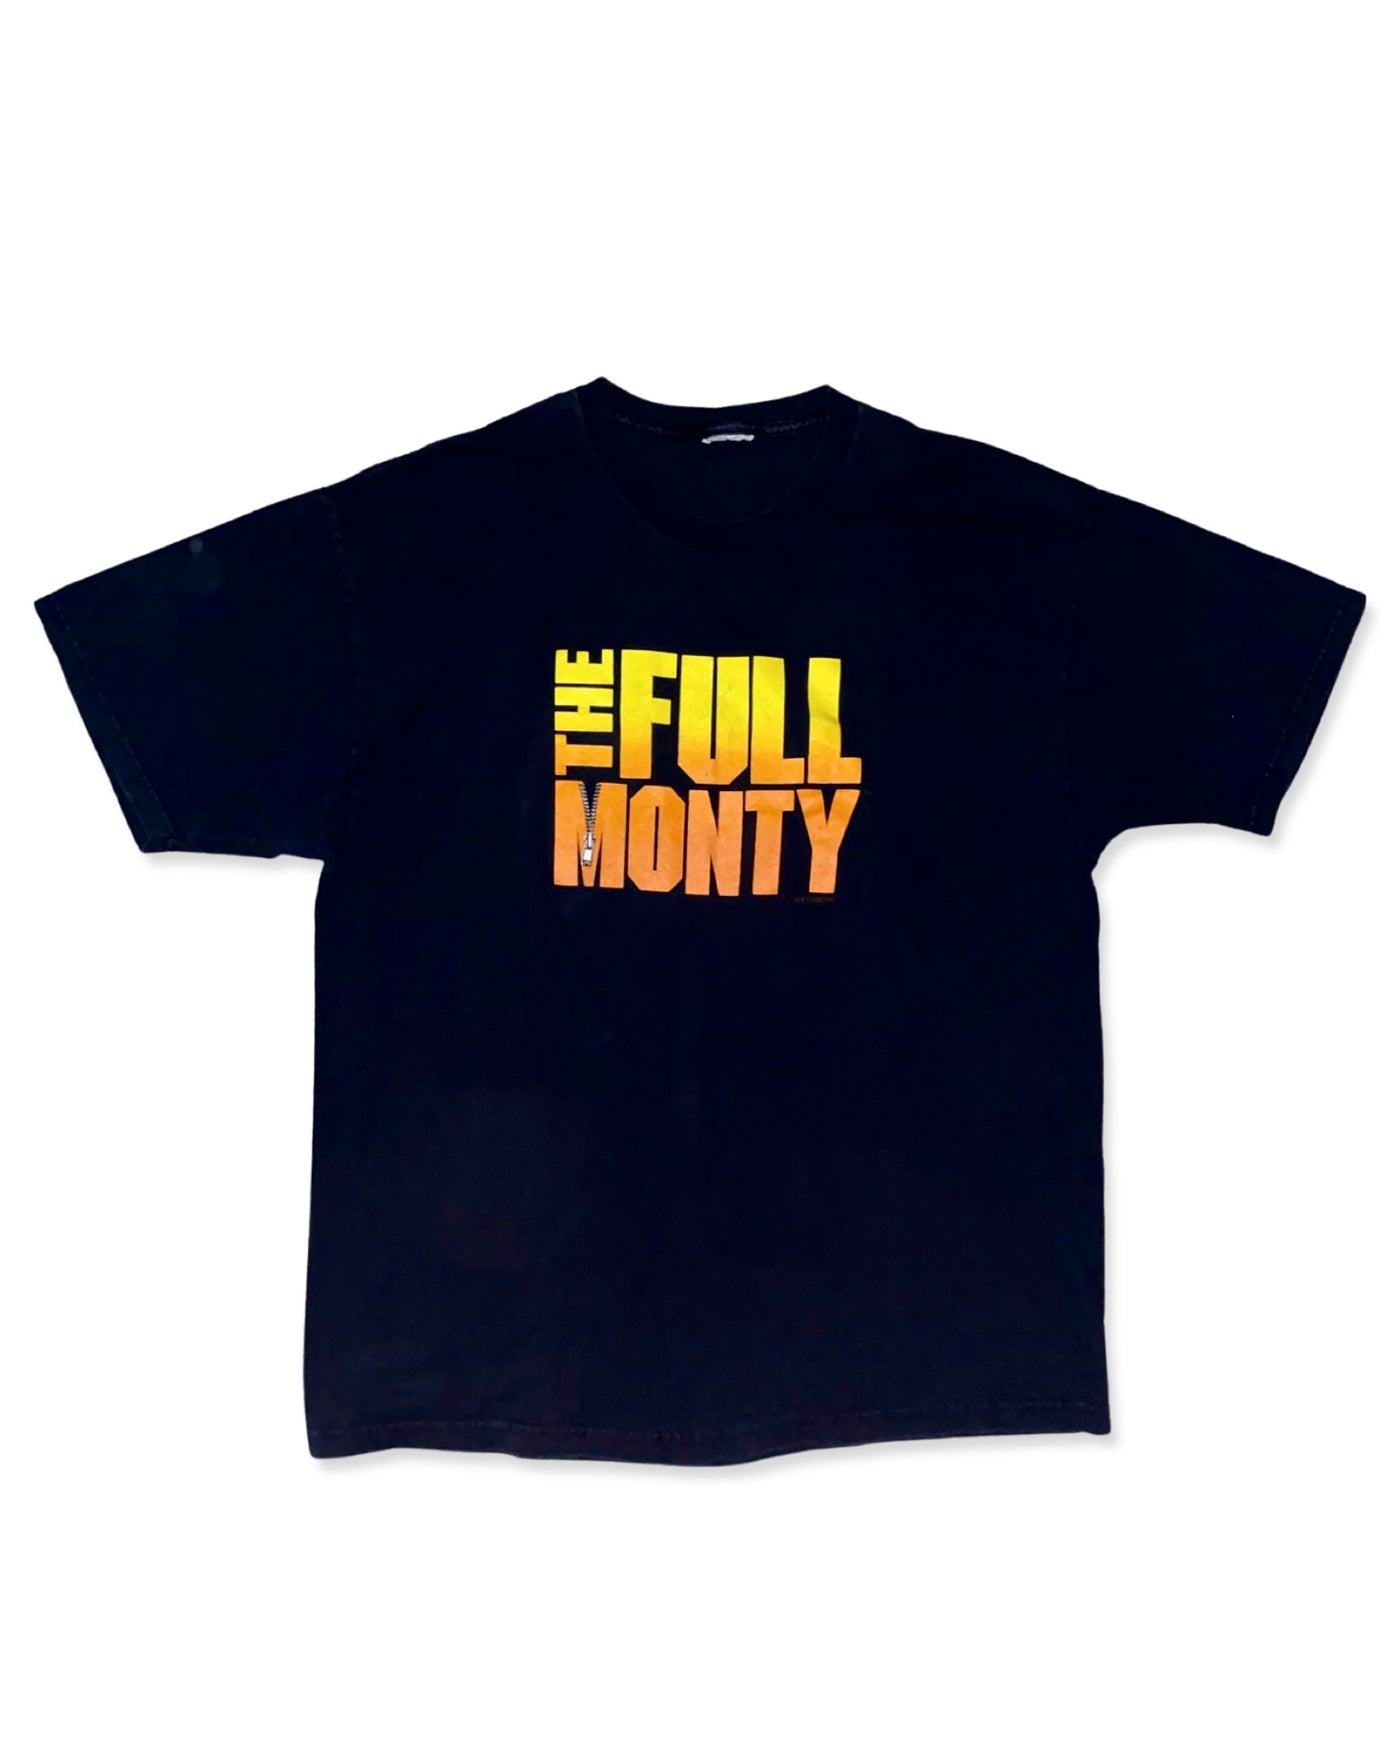 Vintage 1999 The Full Monty T-Shirt